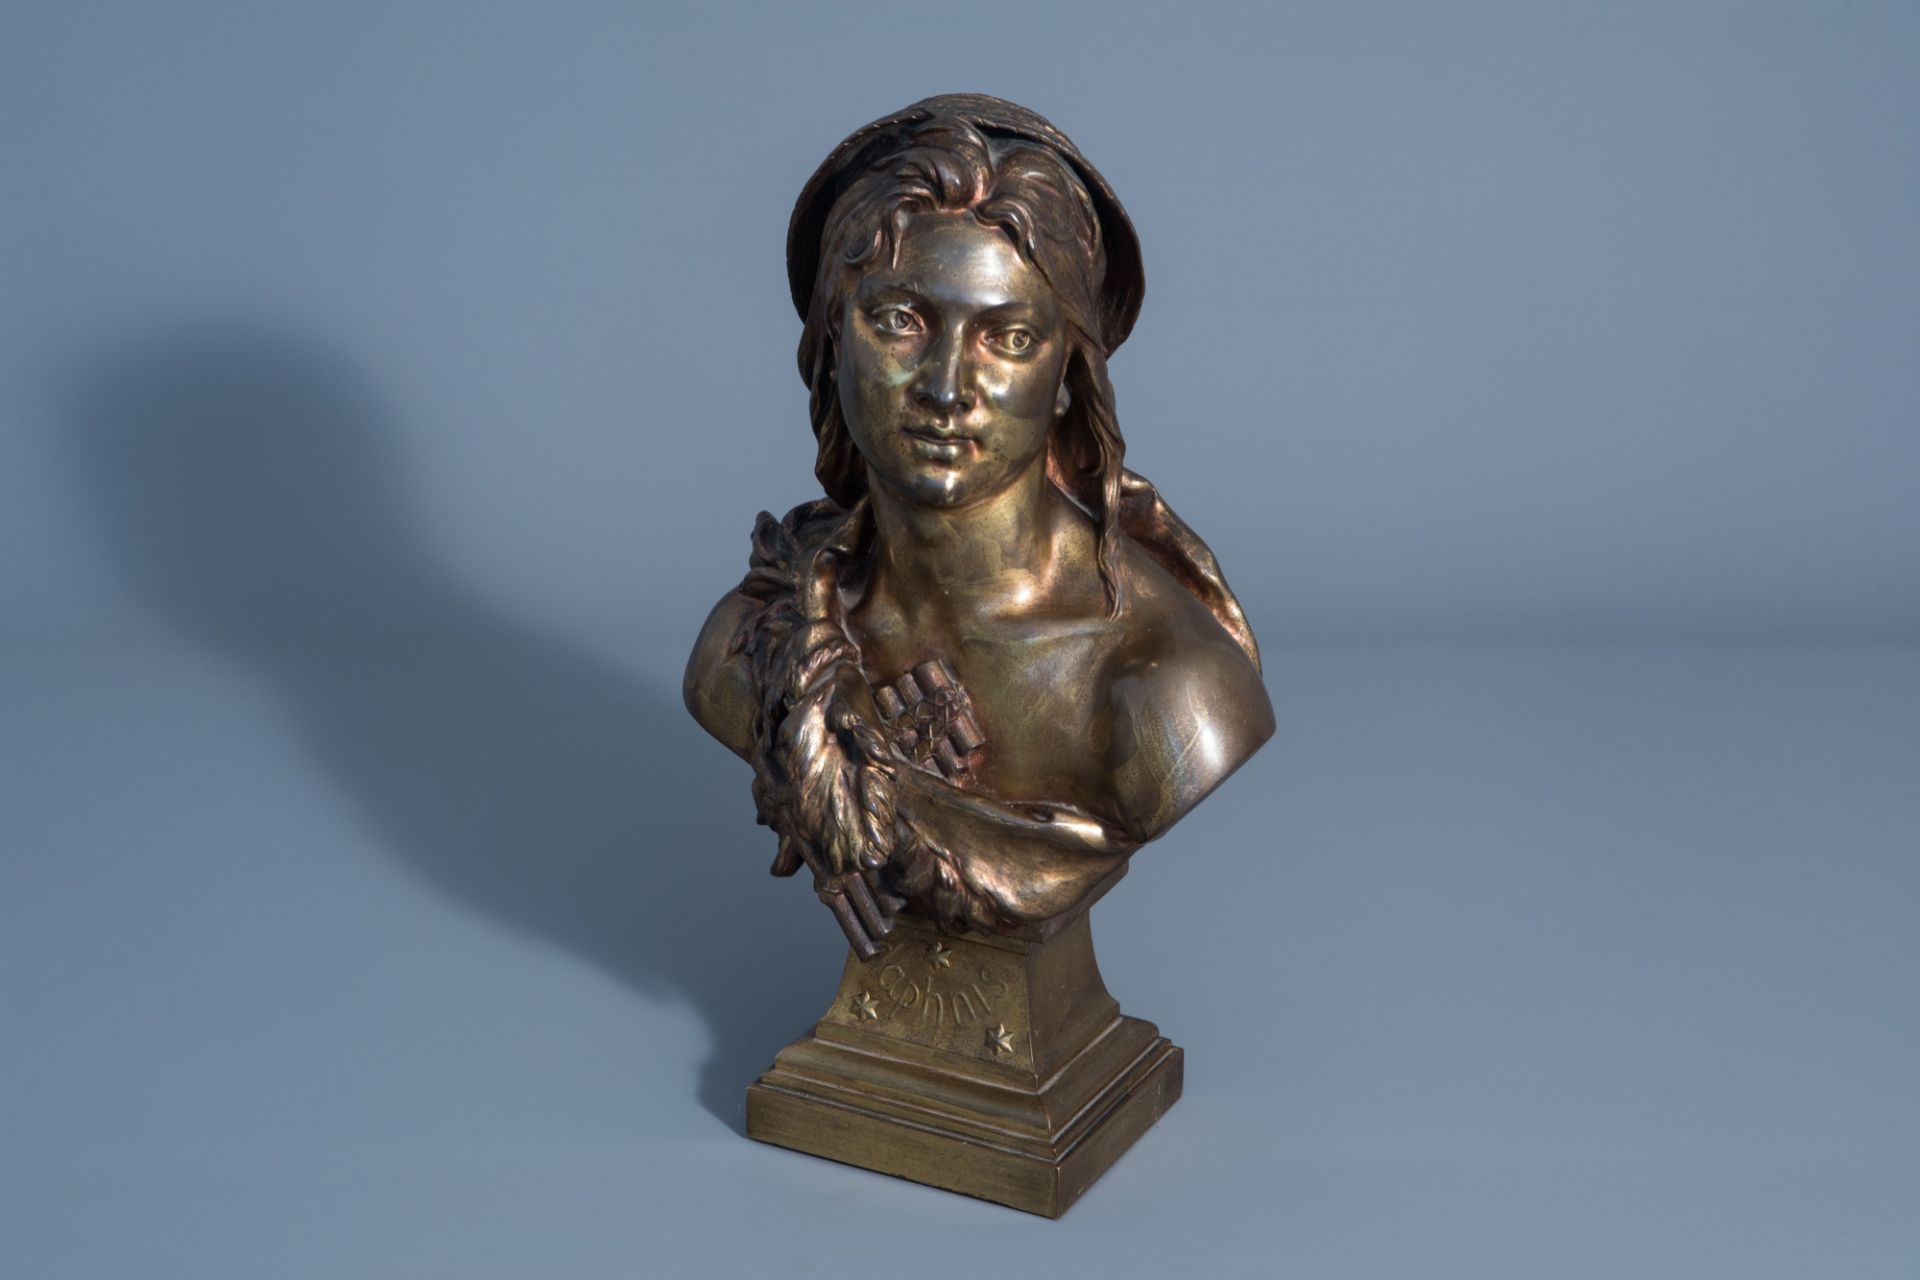 Henry Etienne Dumaige (1830-1888): 'Daphnis', patinated bronze